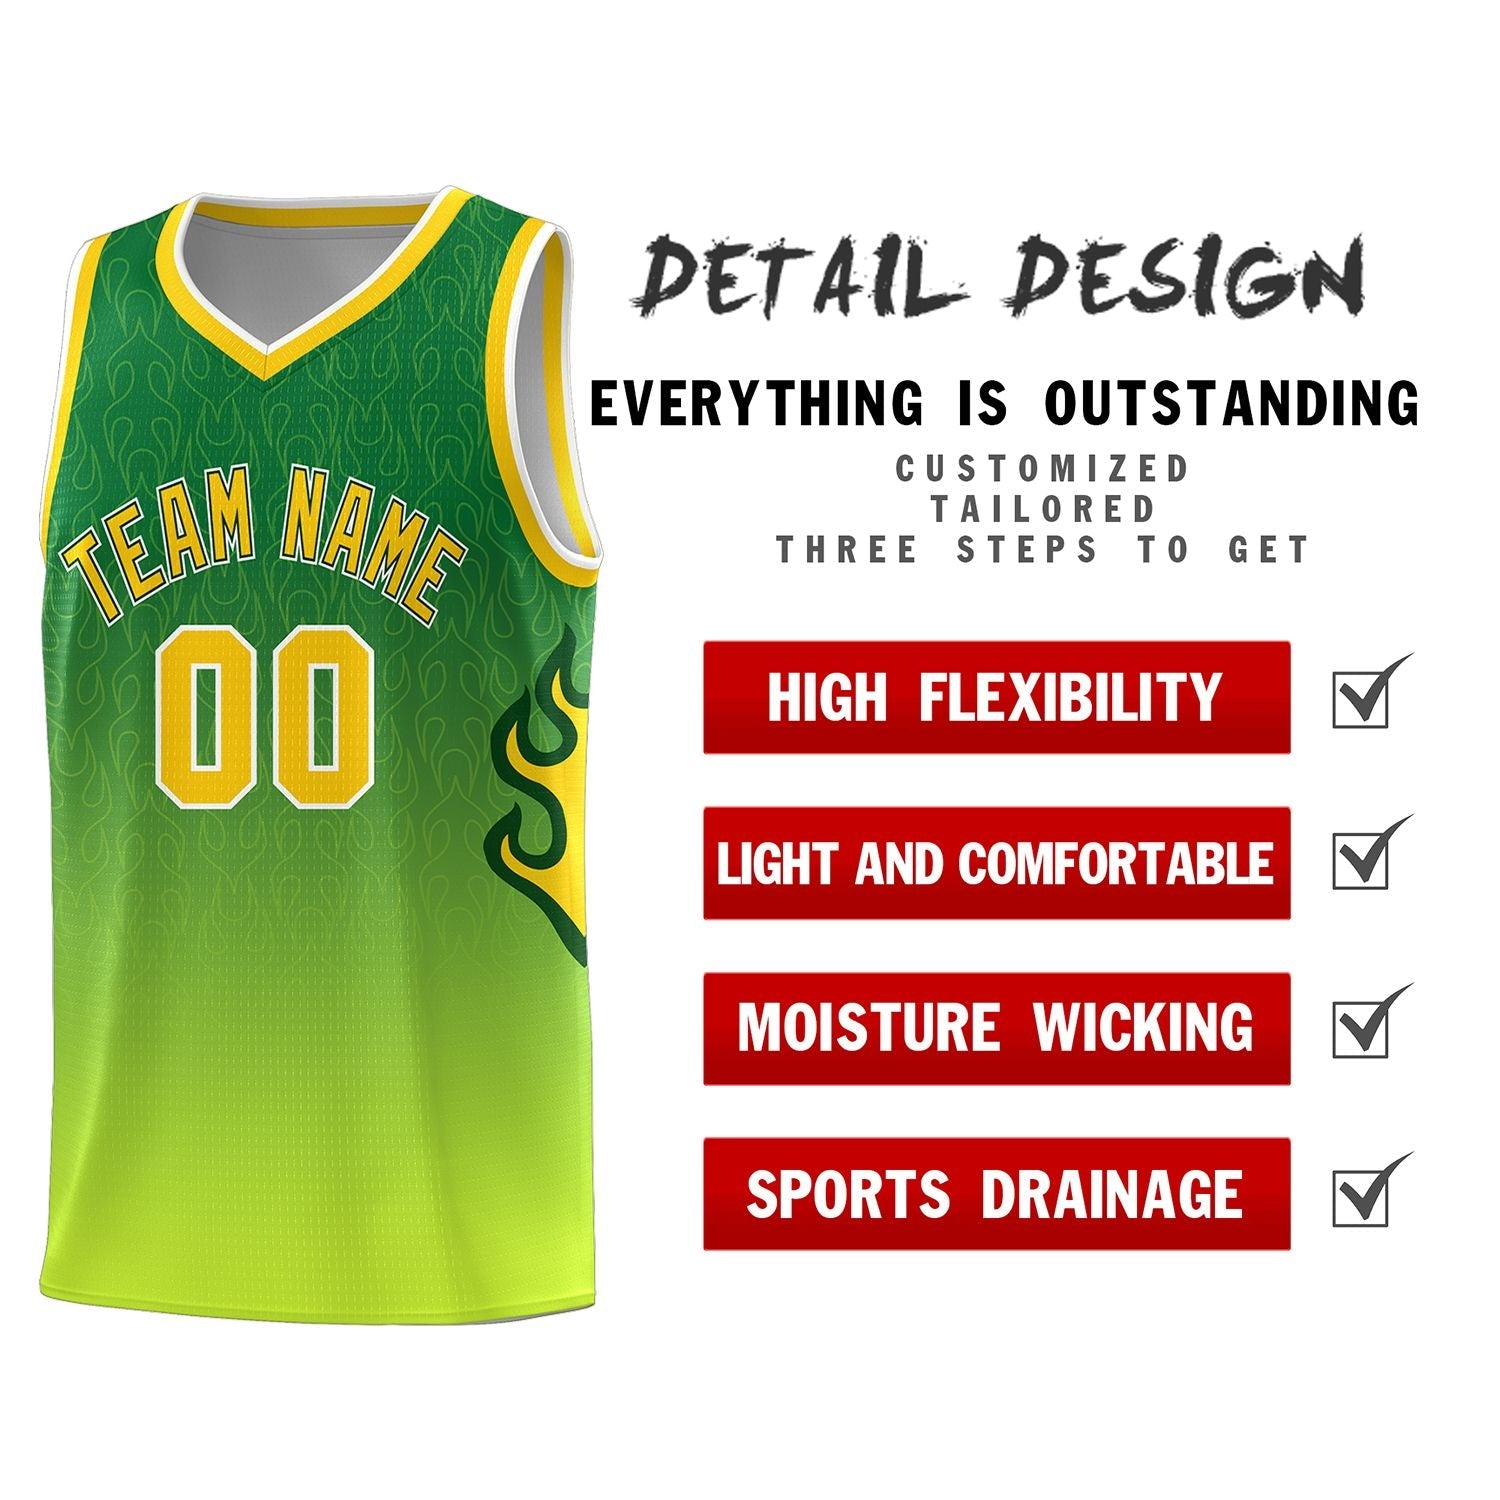 Custom Kelly Green-Neon Green-Gold Flame Gradient Fashion Sports Uniform Basketball Jersey